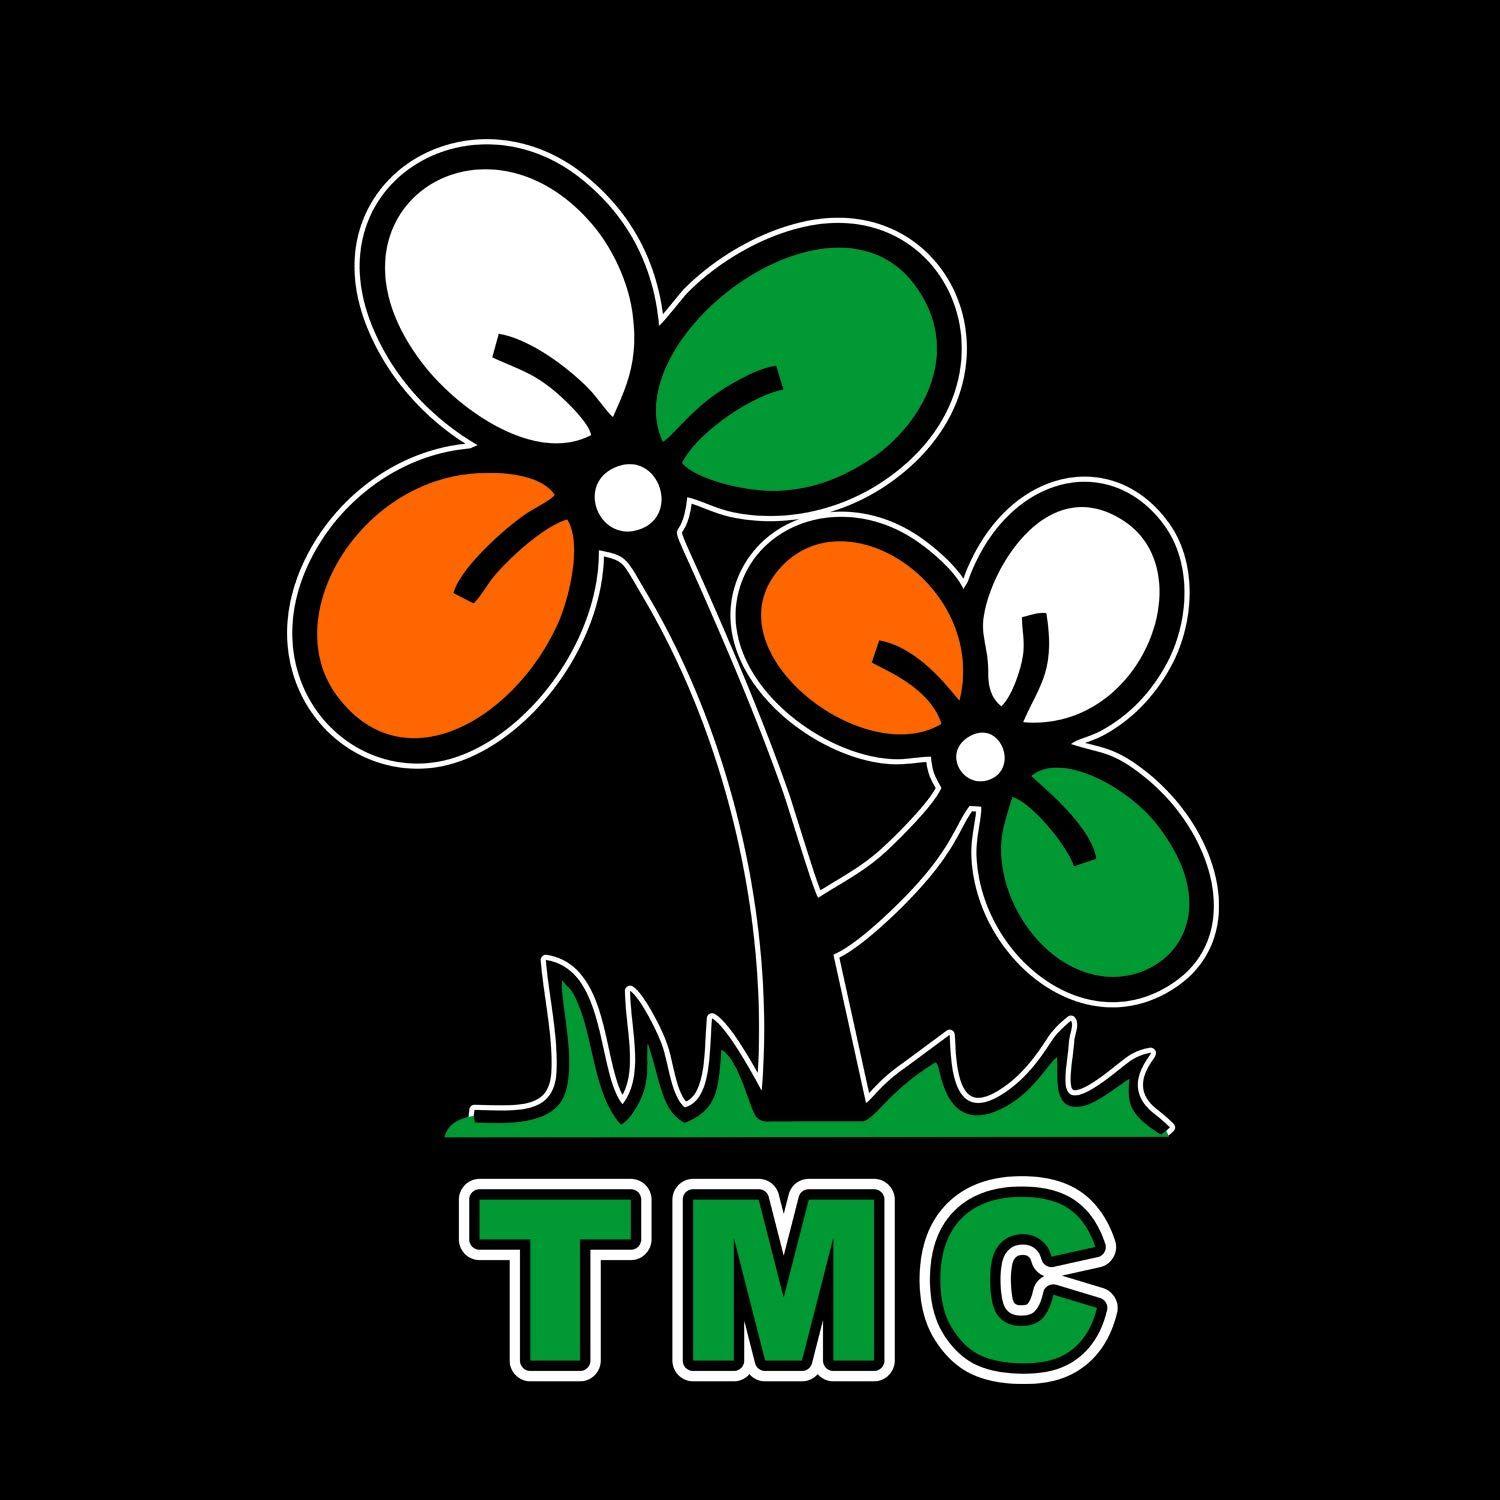 Tmc logo letter design Royalty Free Vector Image